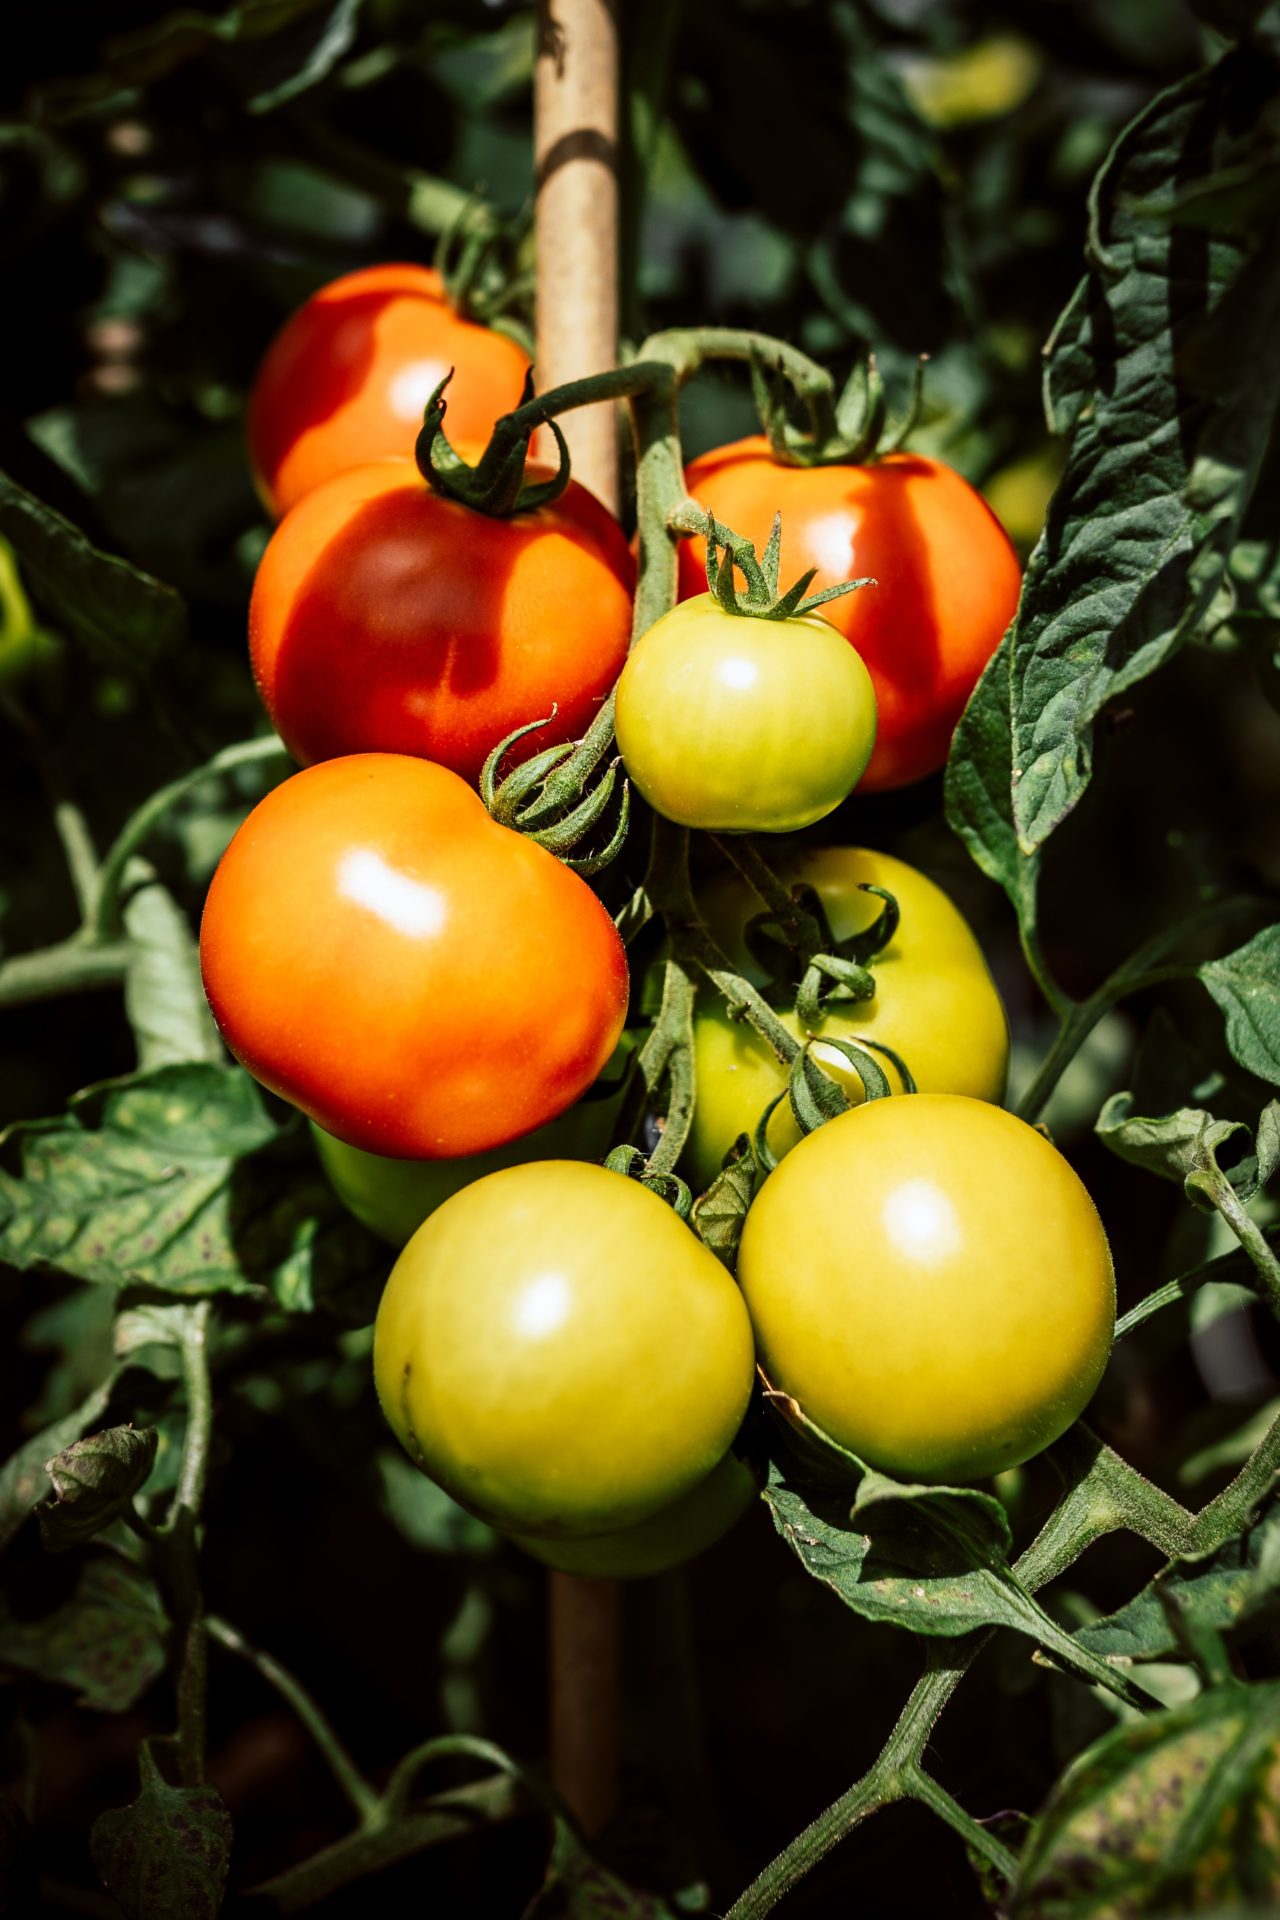 IUNU Introduces New Greenhouse Tomato Imaging System